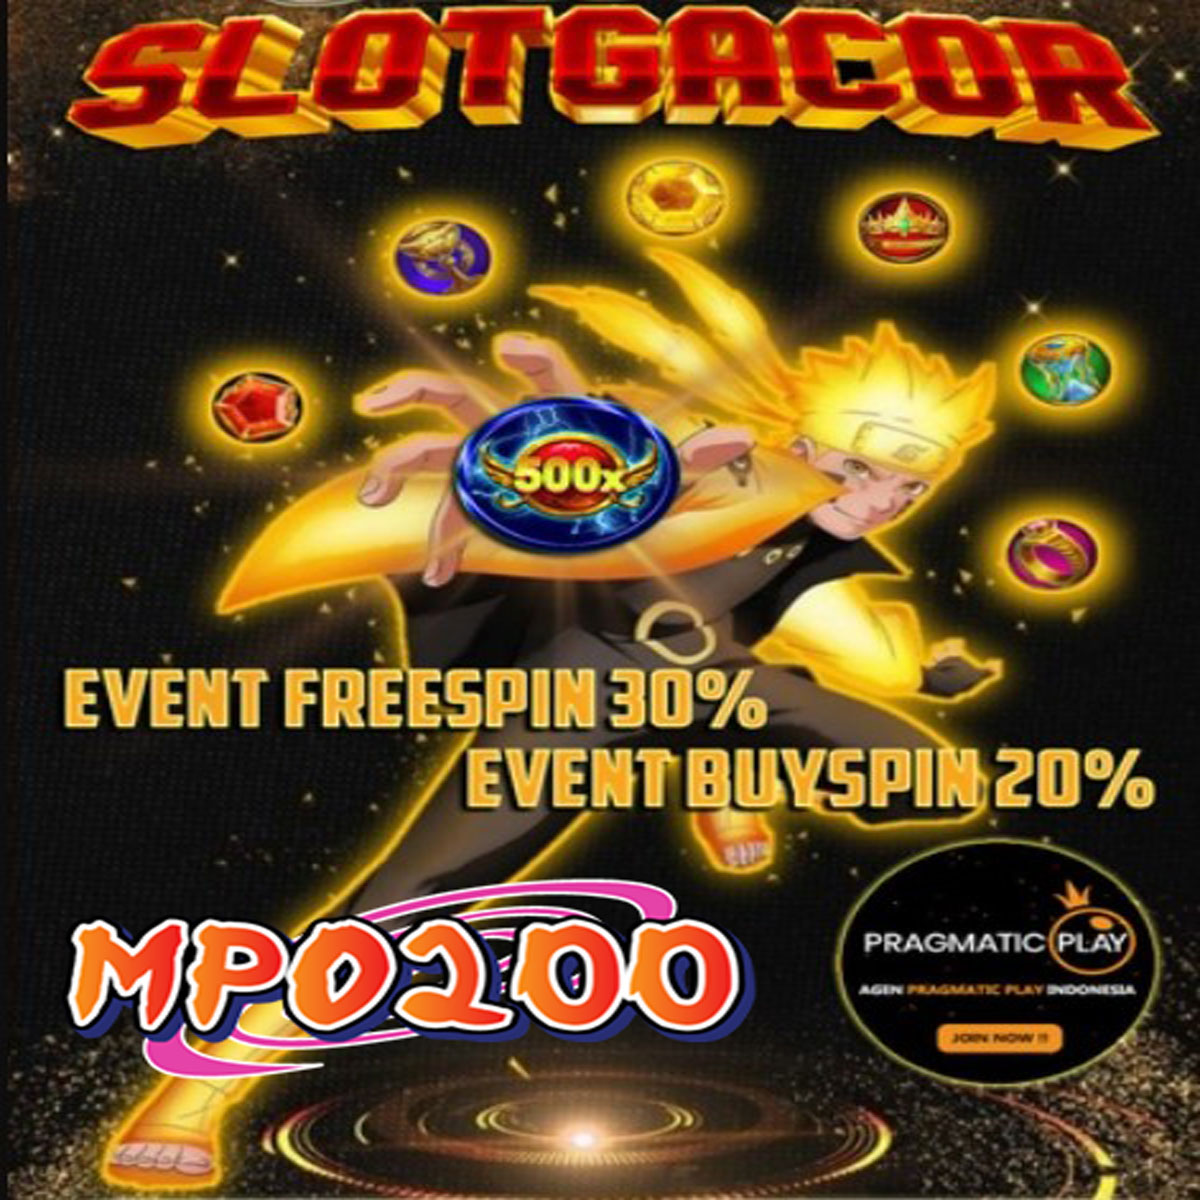 MPO200 event freespin 30% & event buyspin 20%